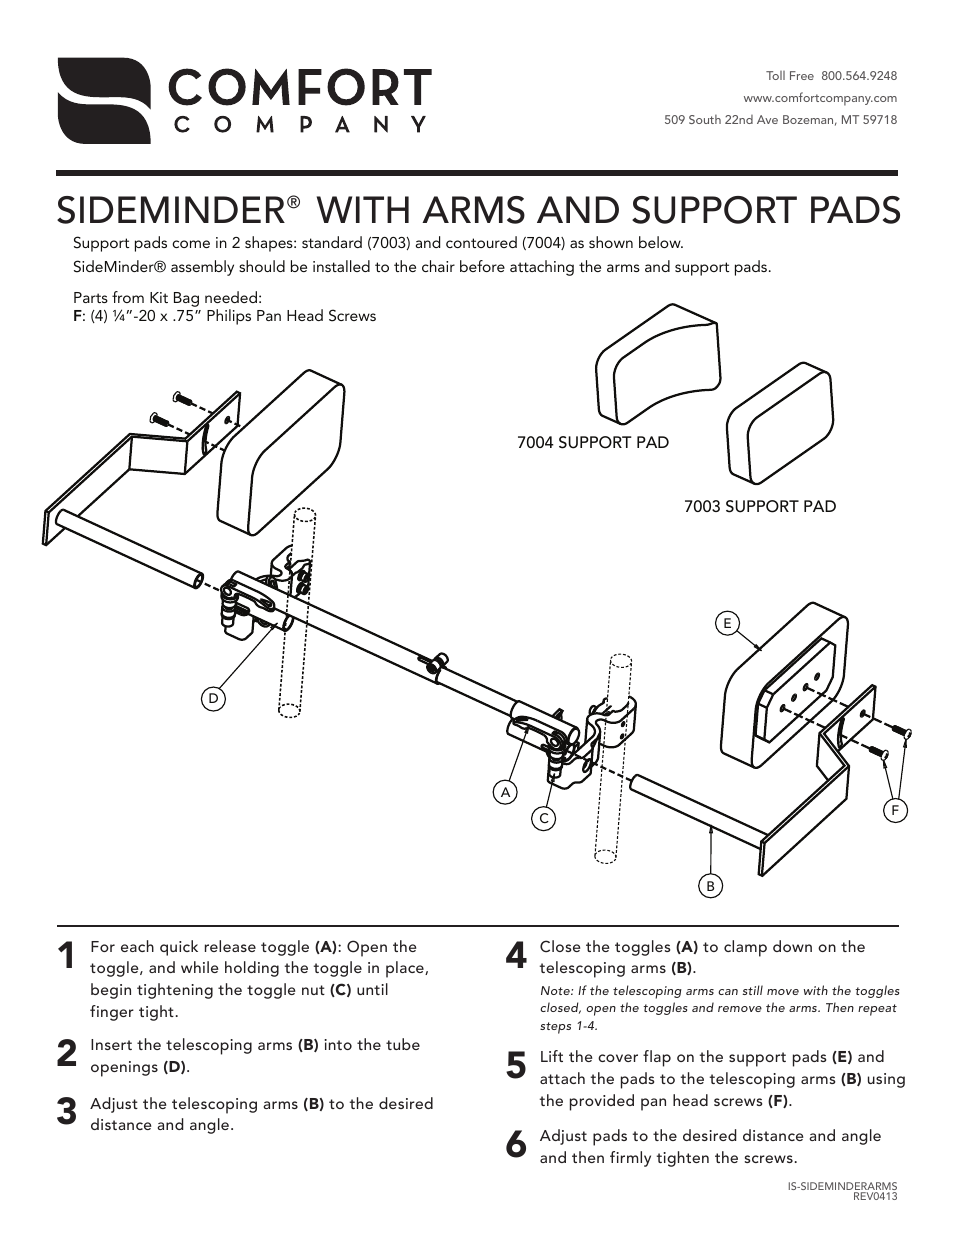 Sideminder Arms